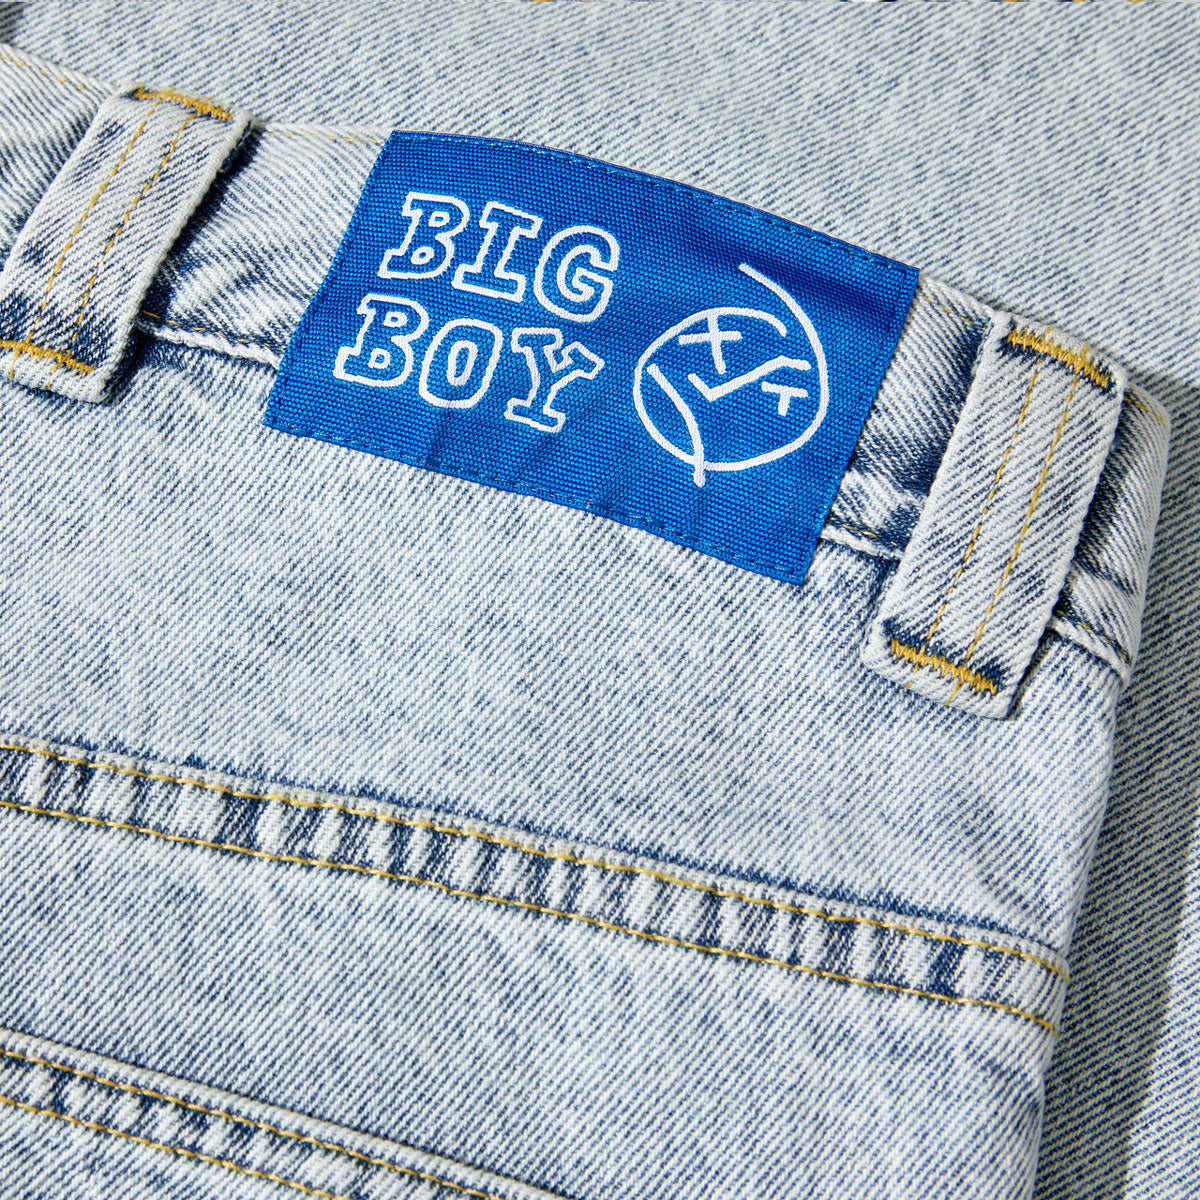 Polar Big Boy Jeans - Light Blue image 4